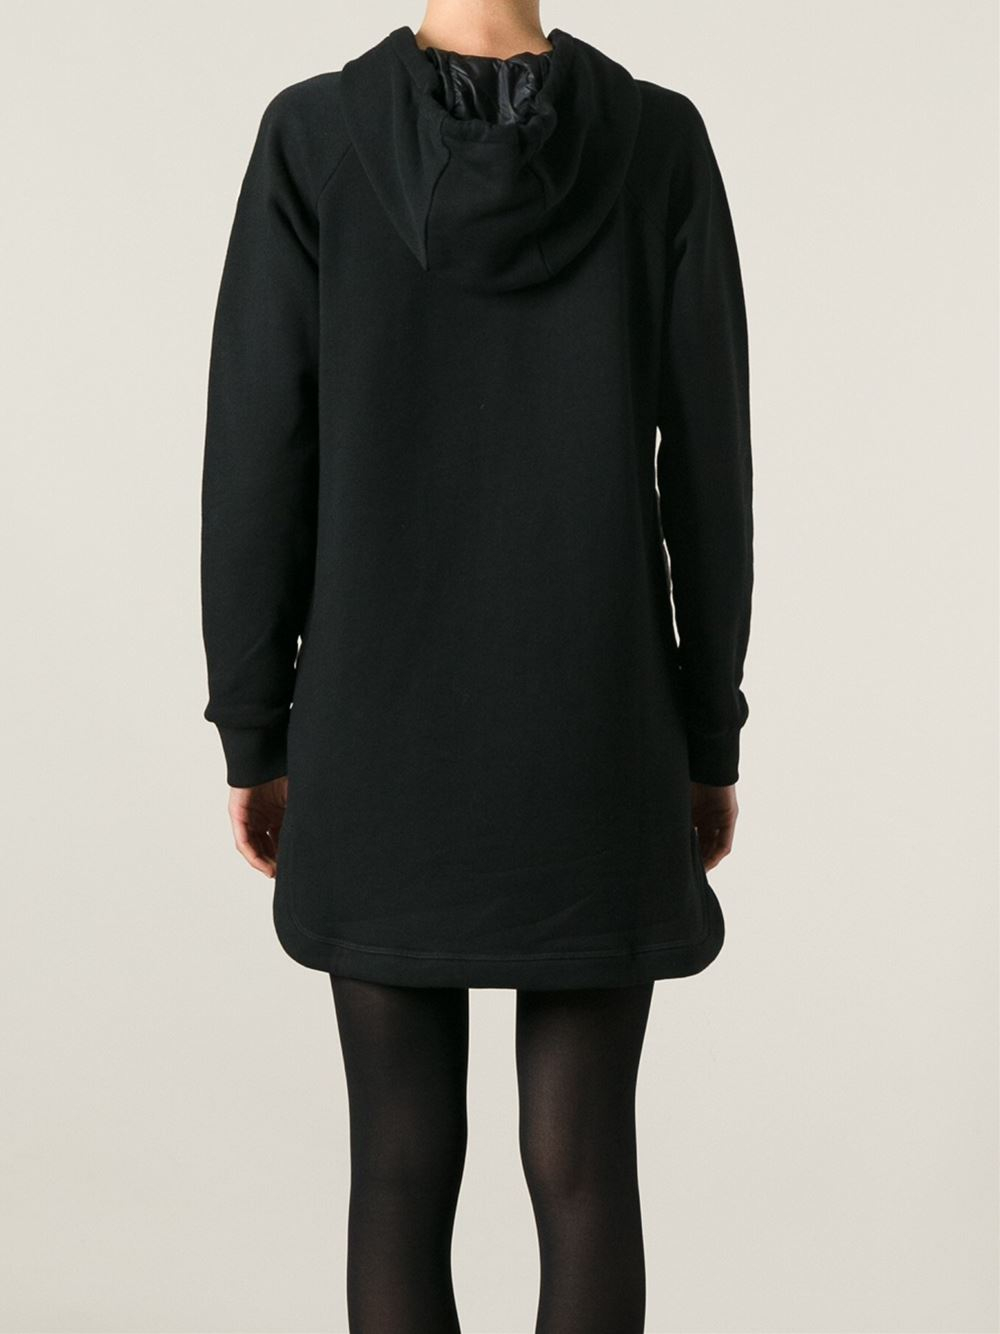 Moncler Padded Dress in Black - Lyst